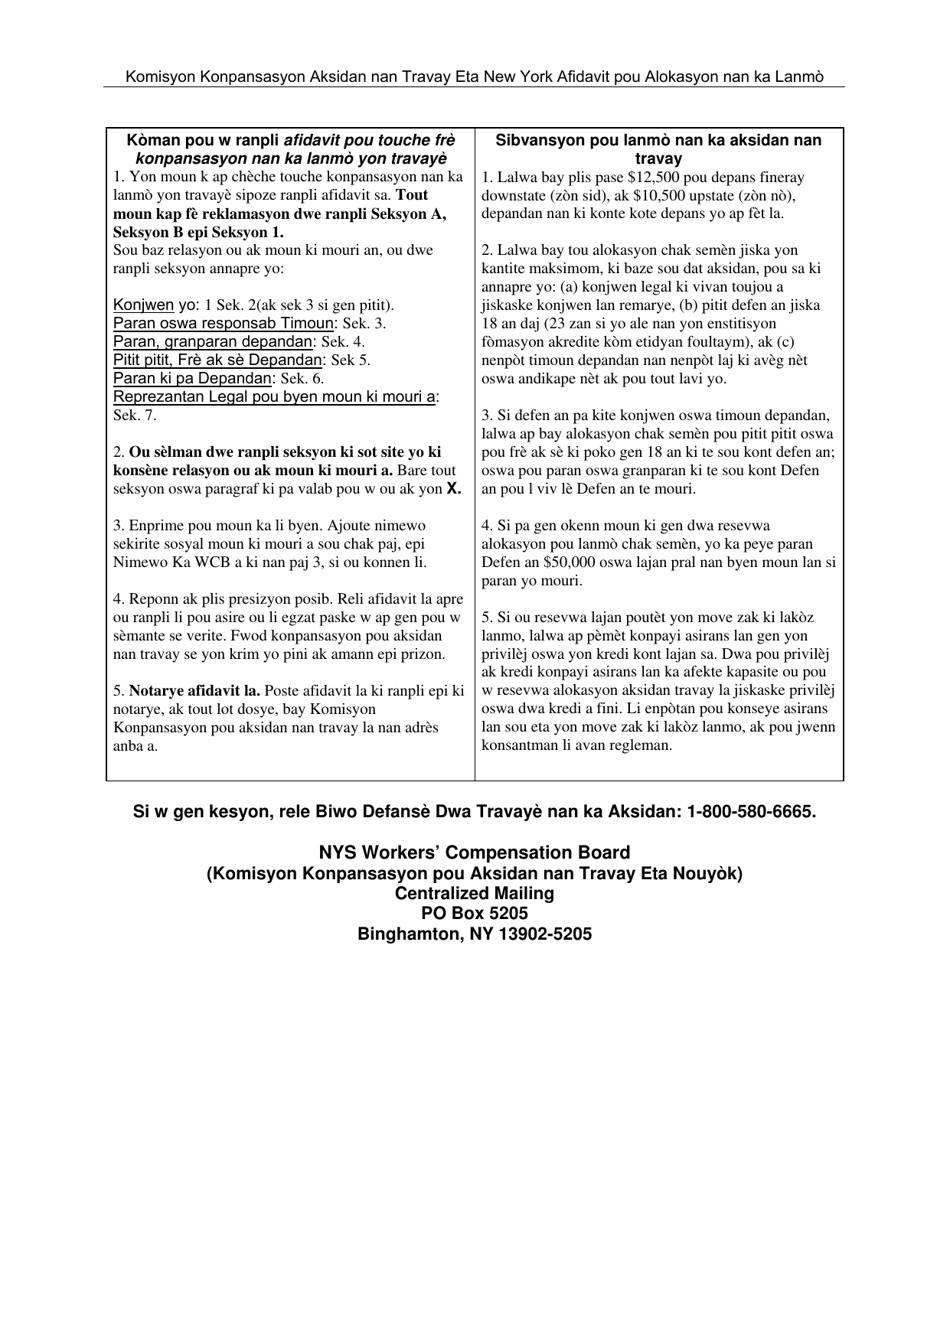 Form AFF-1H Affidavit for Death Benefits - New York (Haitian Creole), Page 1